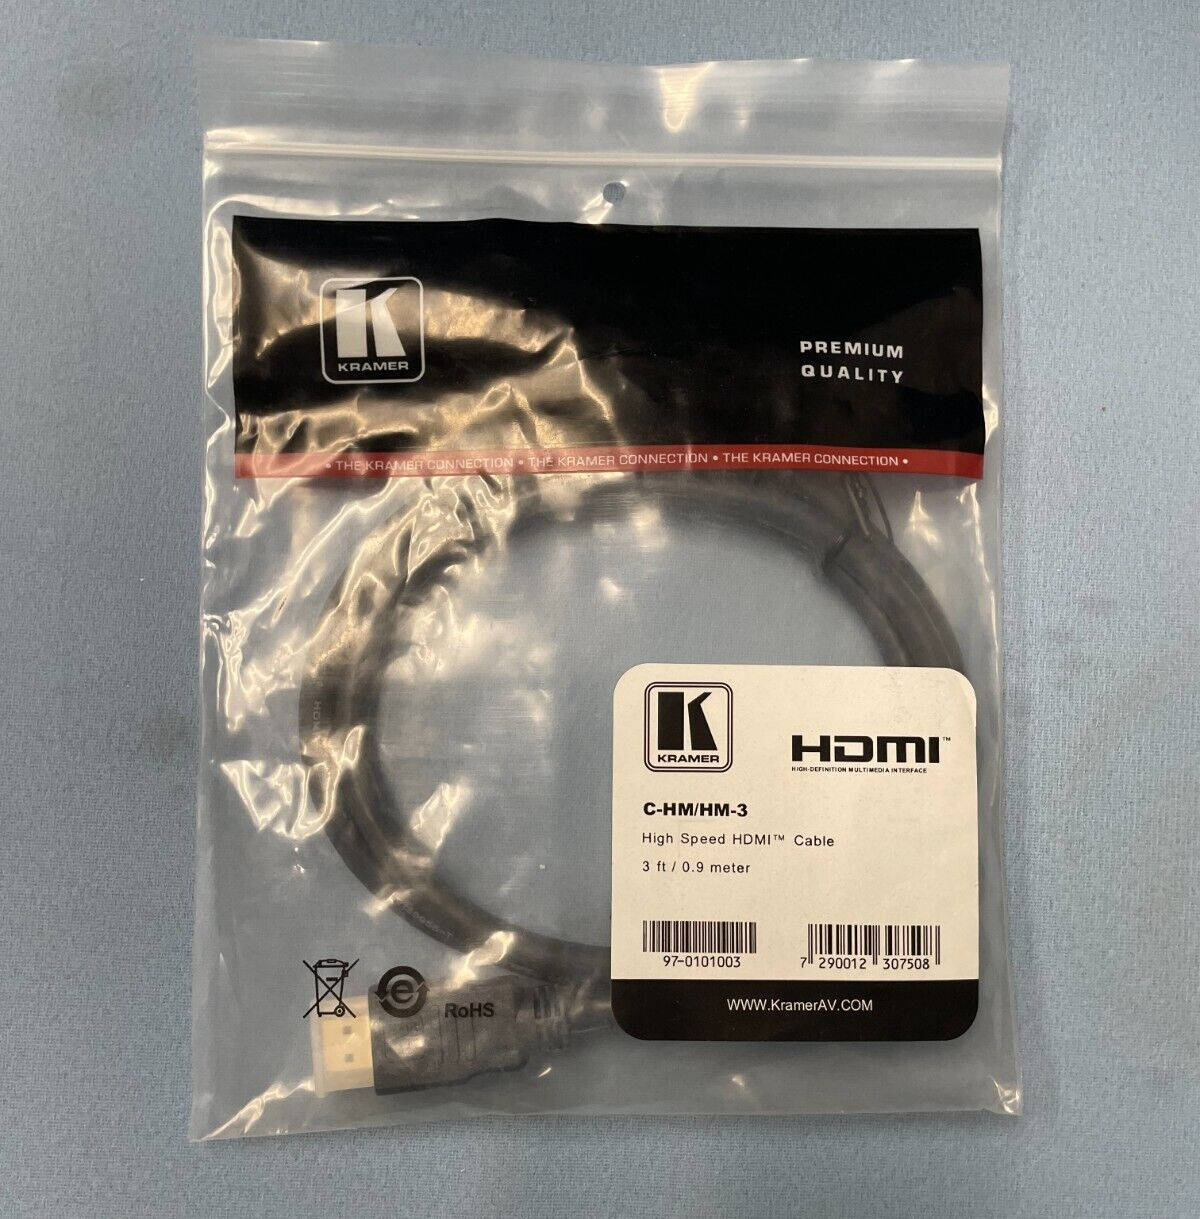 Cable HDMI KRAMER ELECTRONICS 97-0101003 C-HM/HM-3